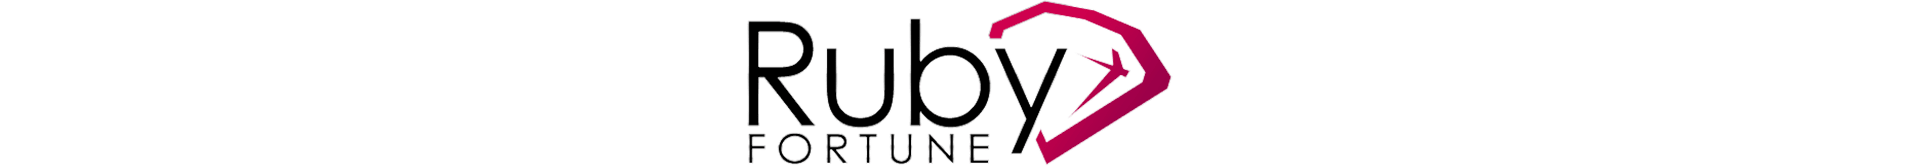 Ruby casino logo.